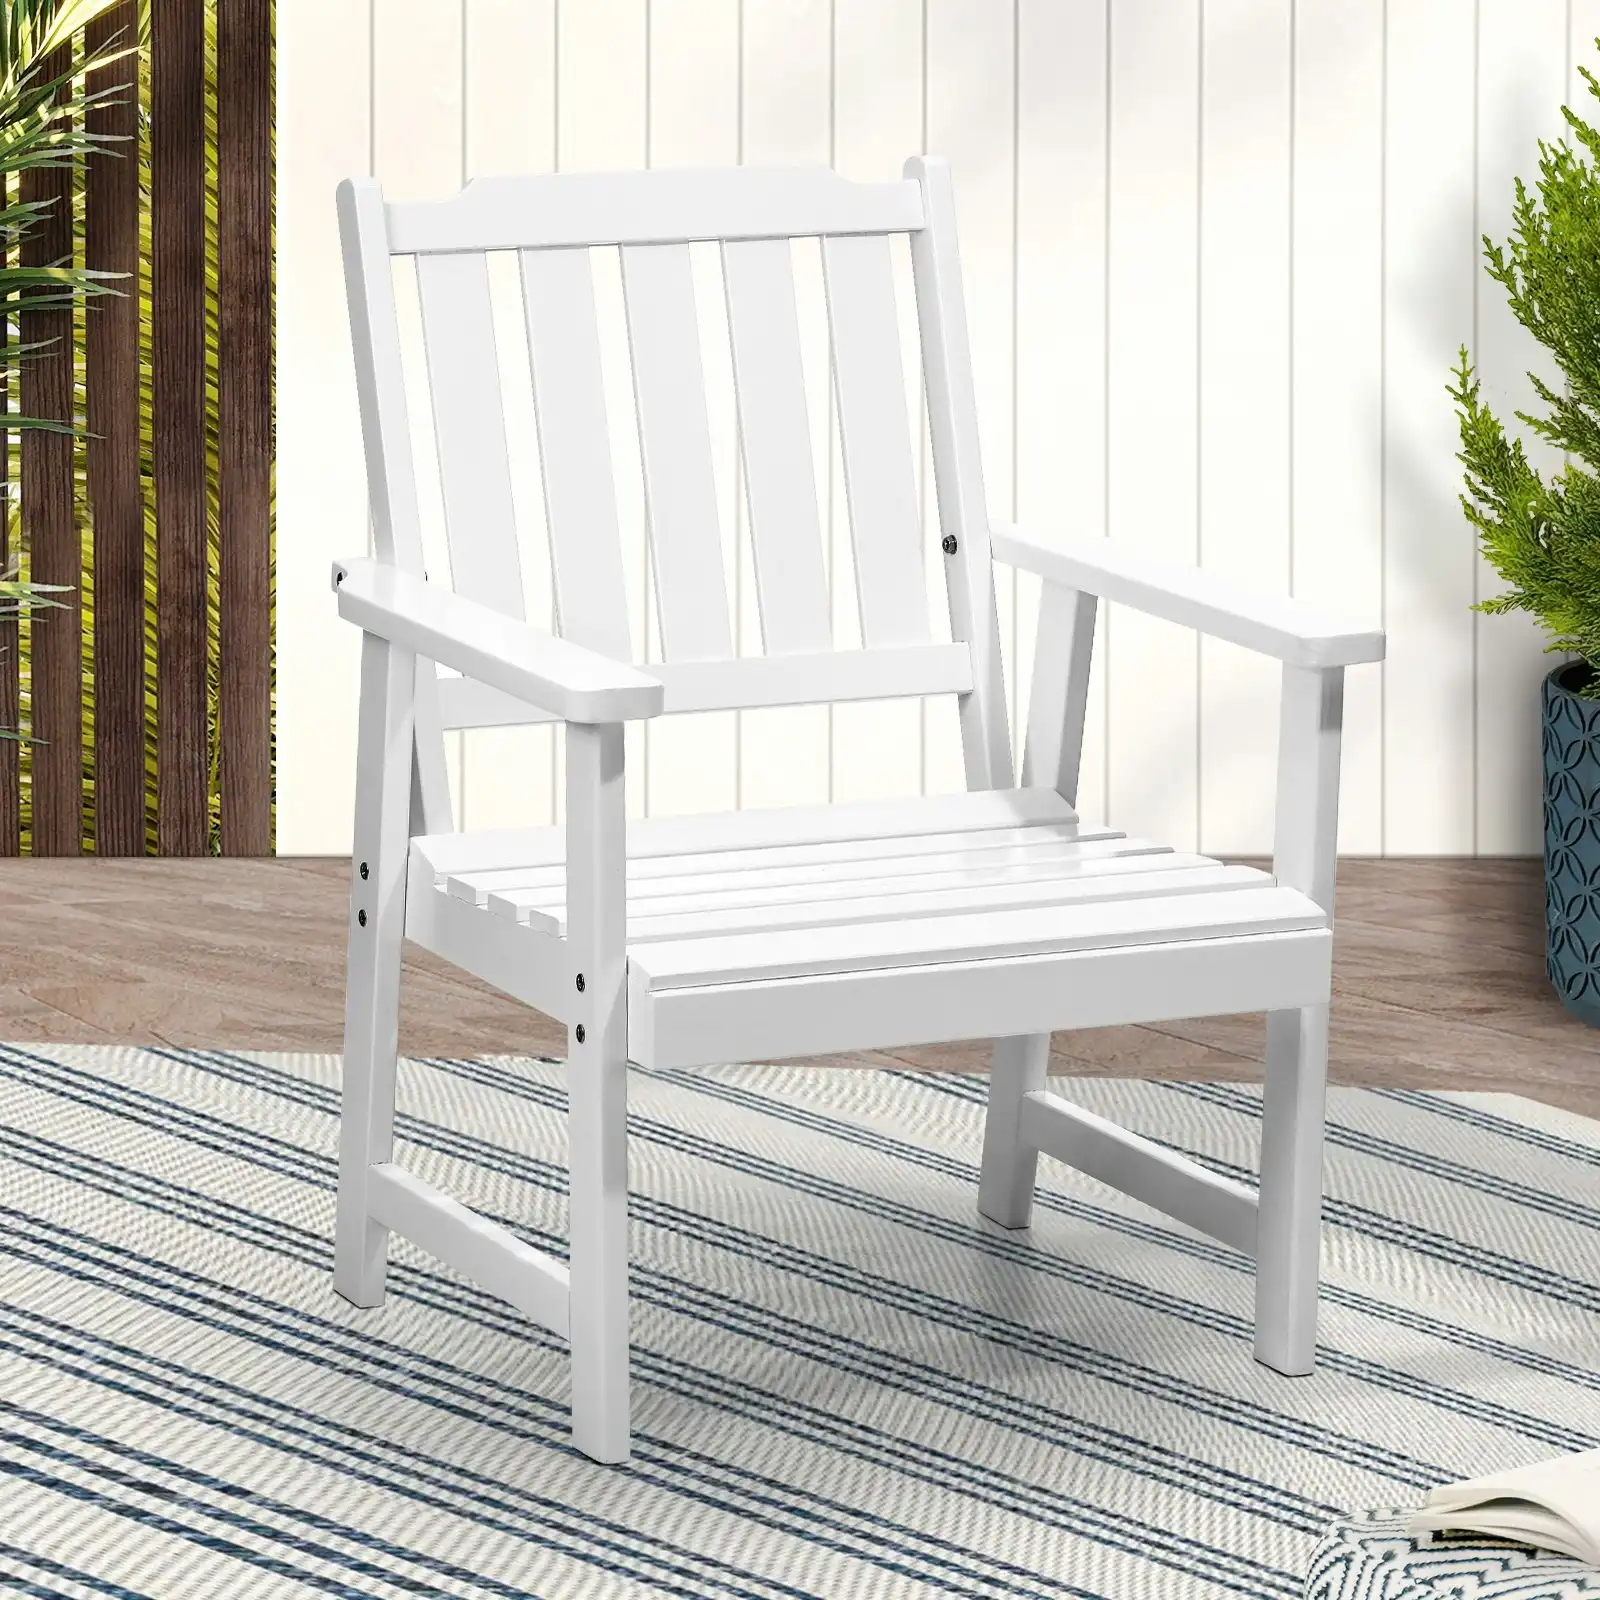 Livsip Outdoor Armchair Wooden Patio Furniture Chairs Garden Seat White